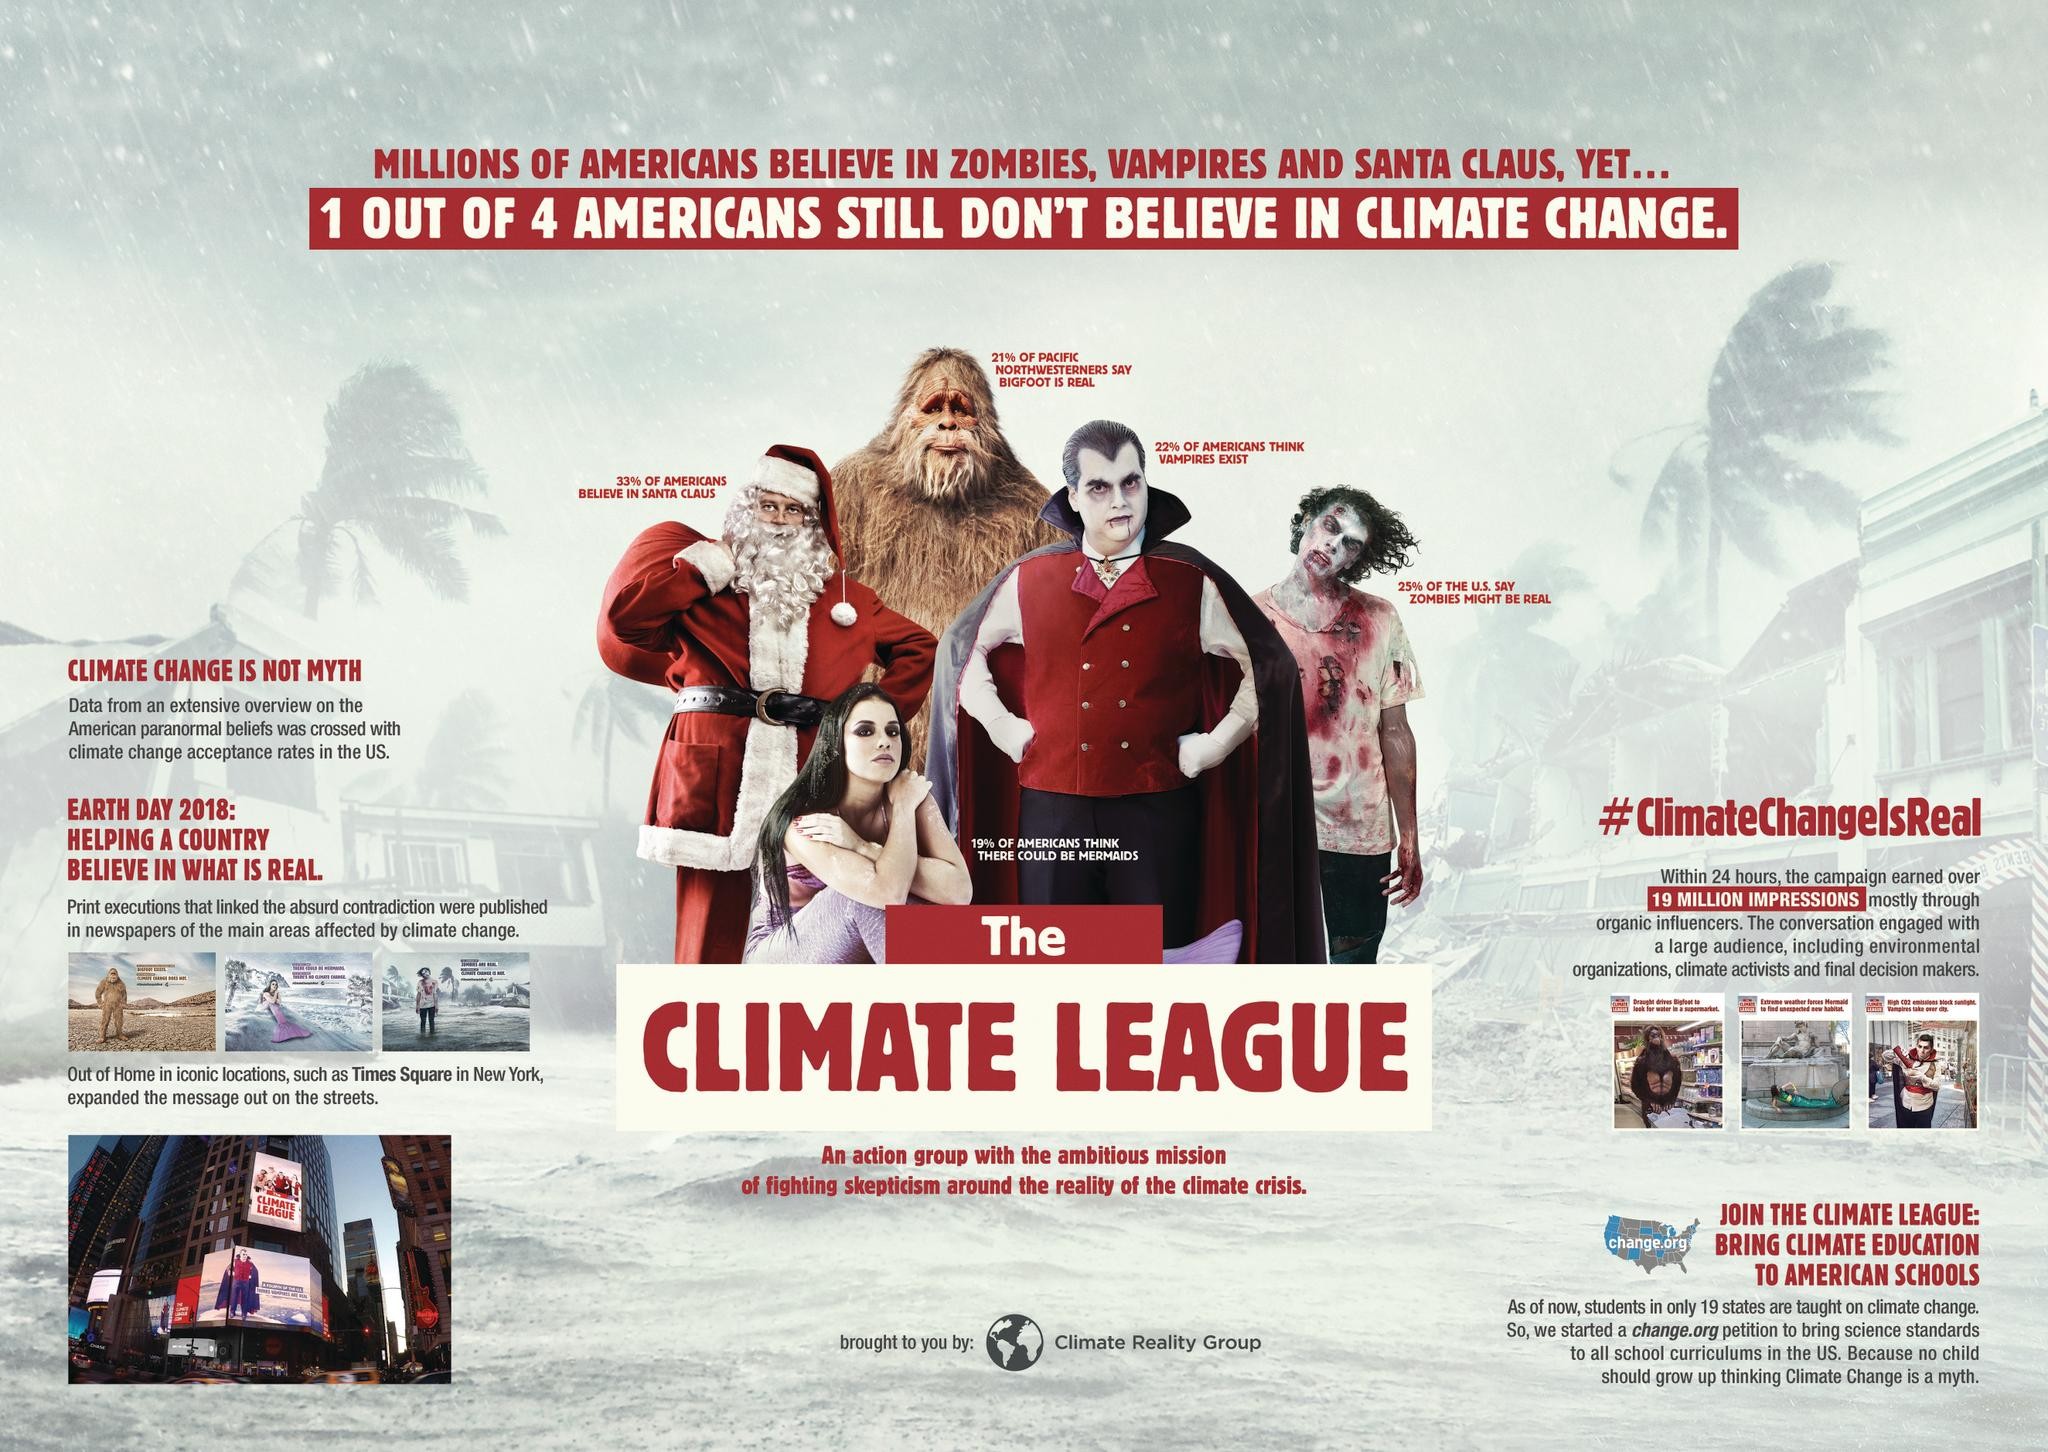 The Climate League